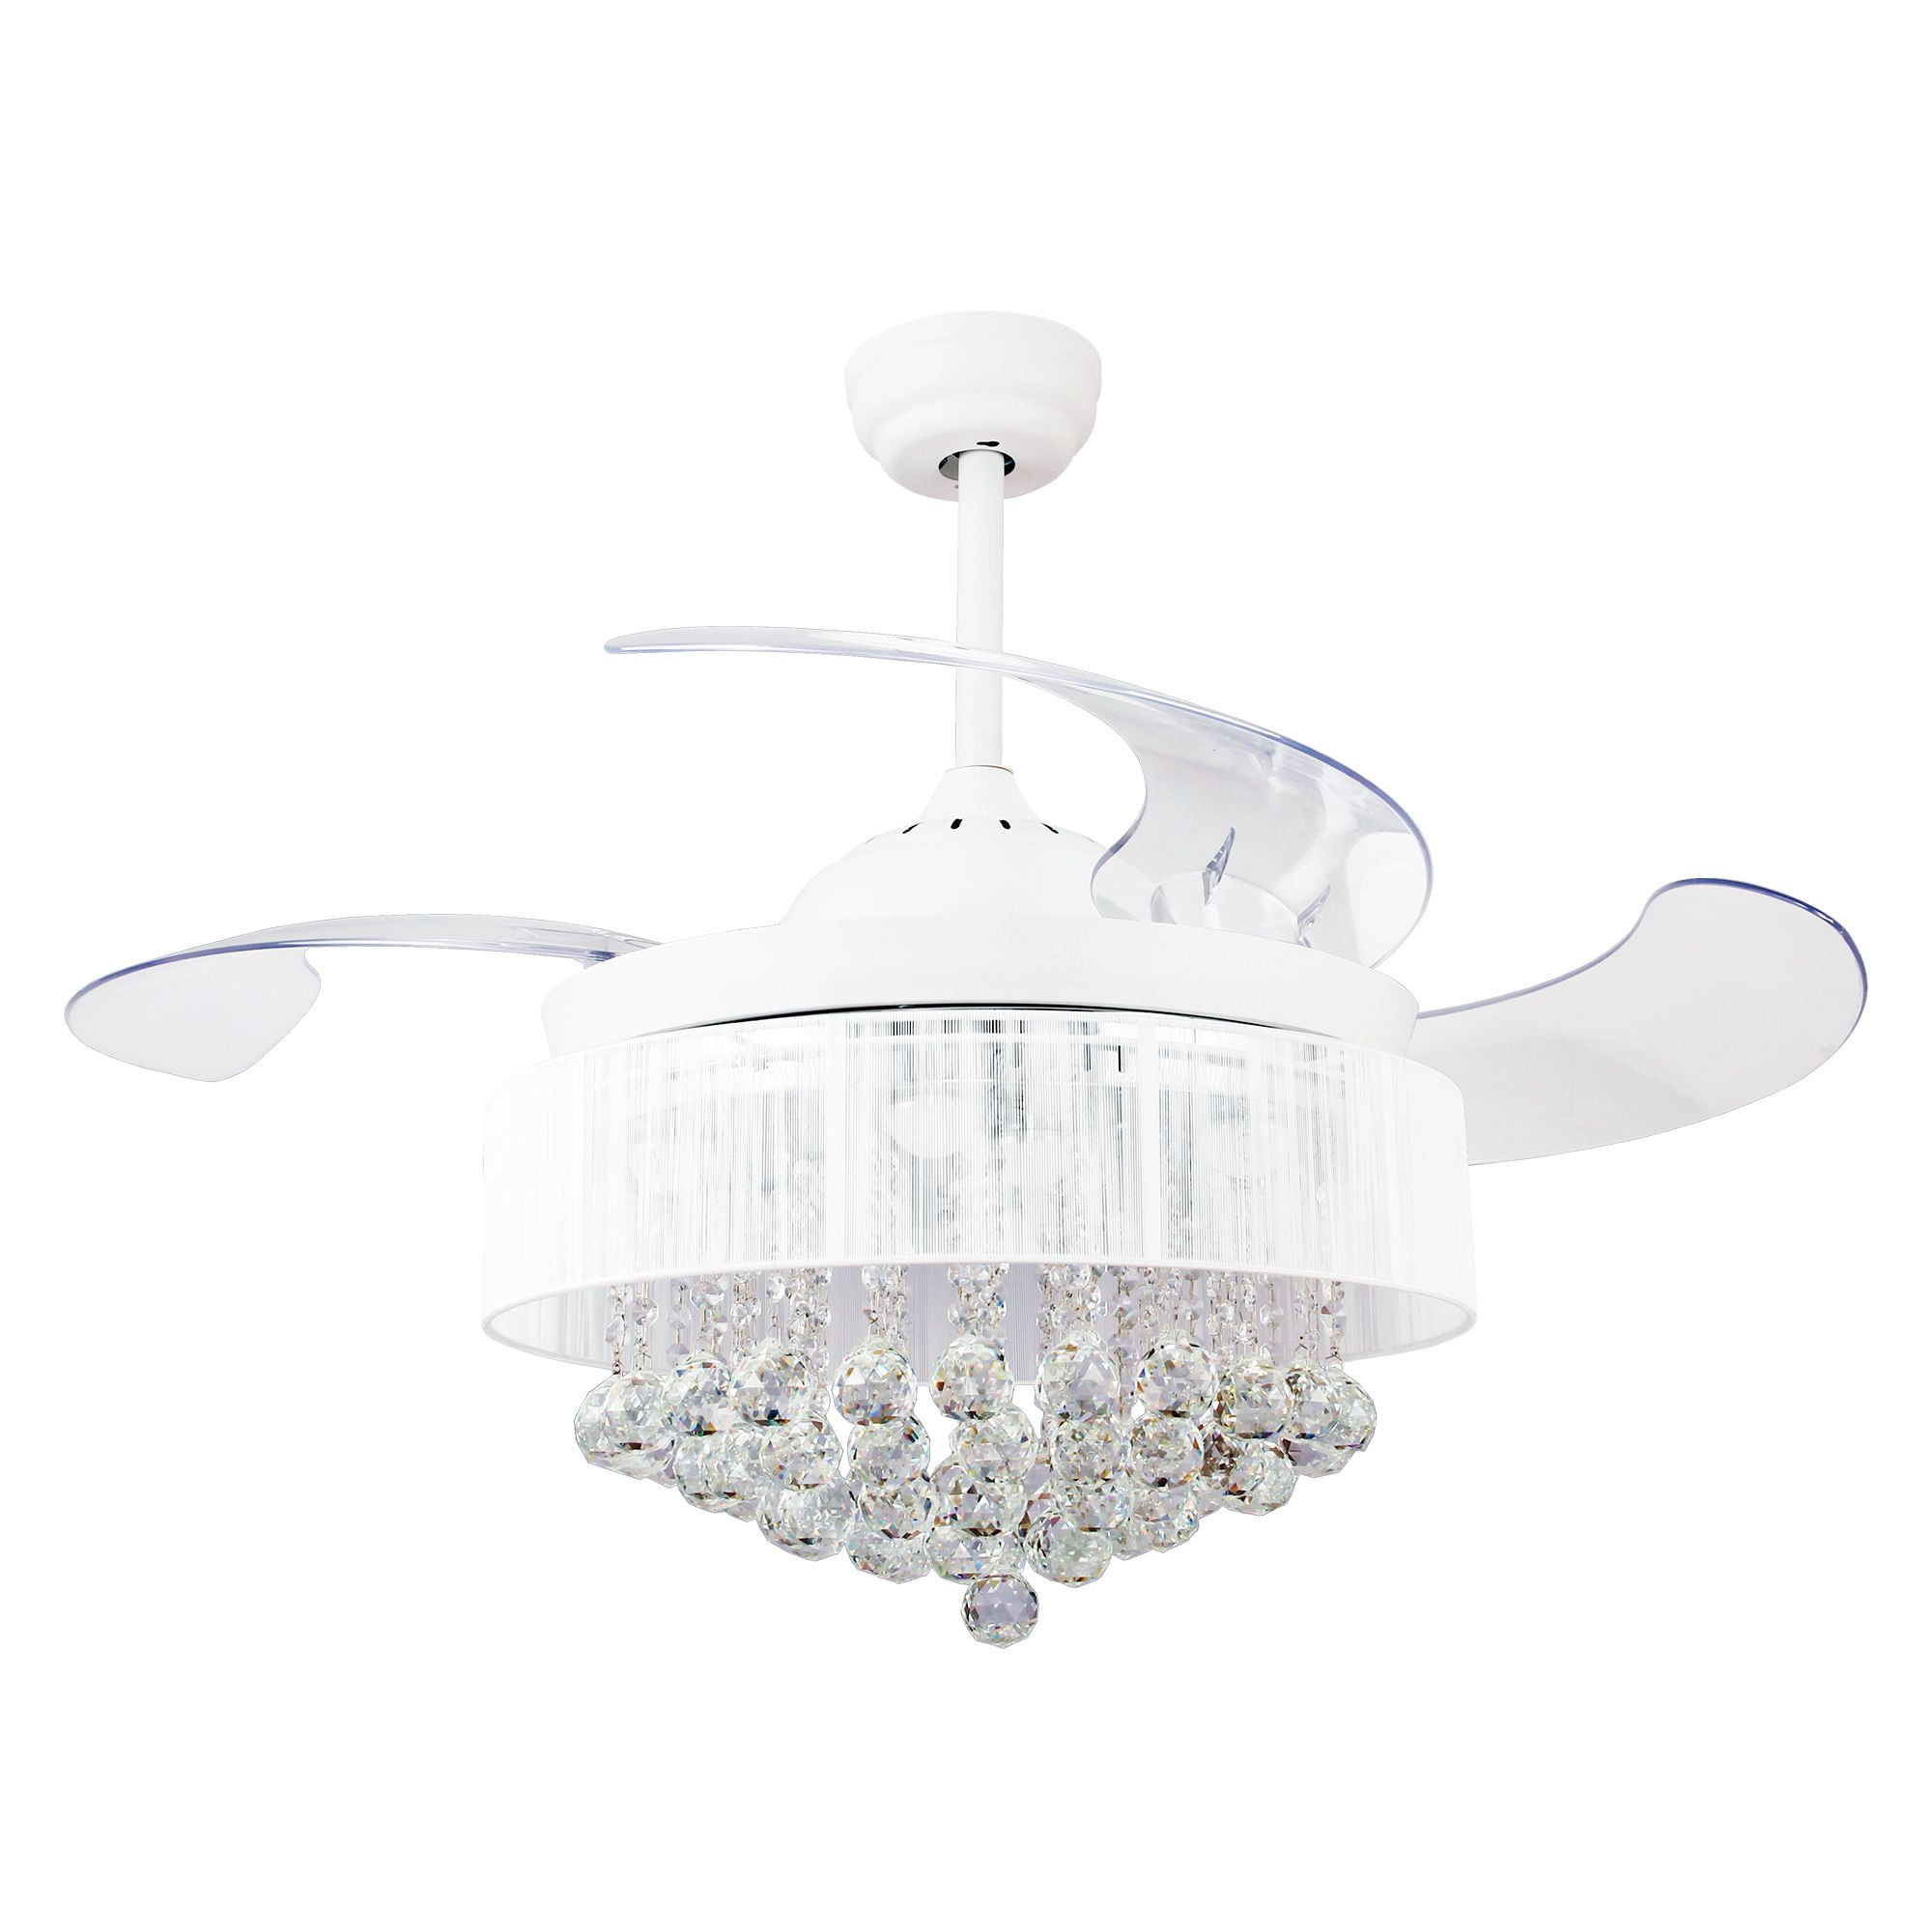 46" Modern Crystal Ceiling Fan Lights LED with Remote Retractable Chandelier Fan 